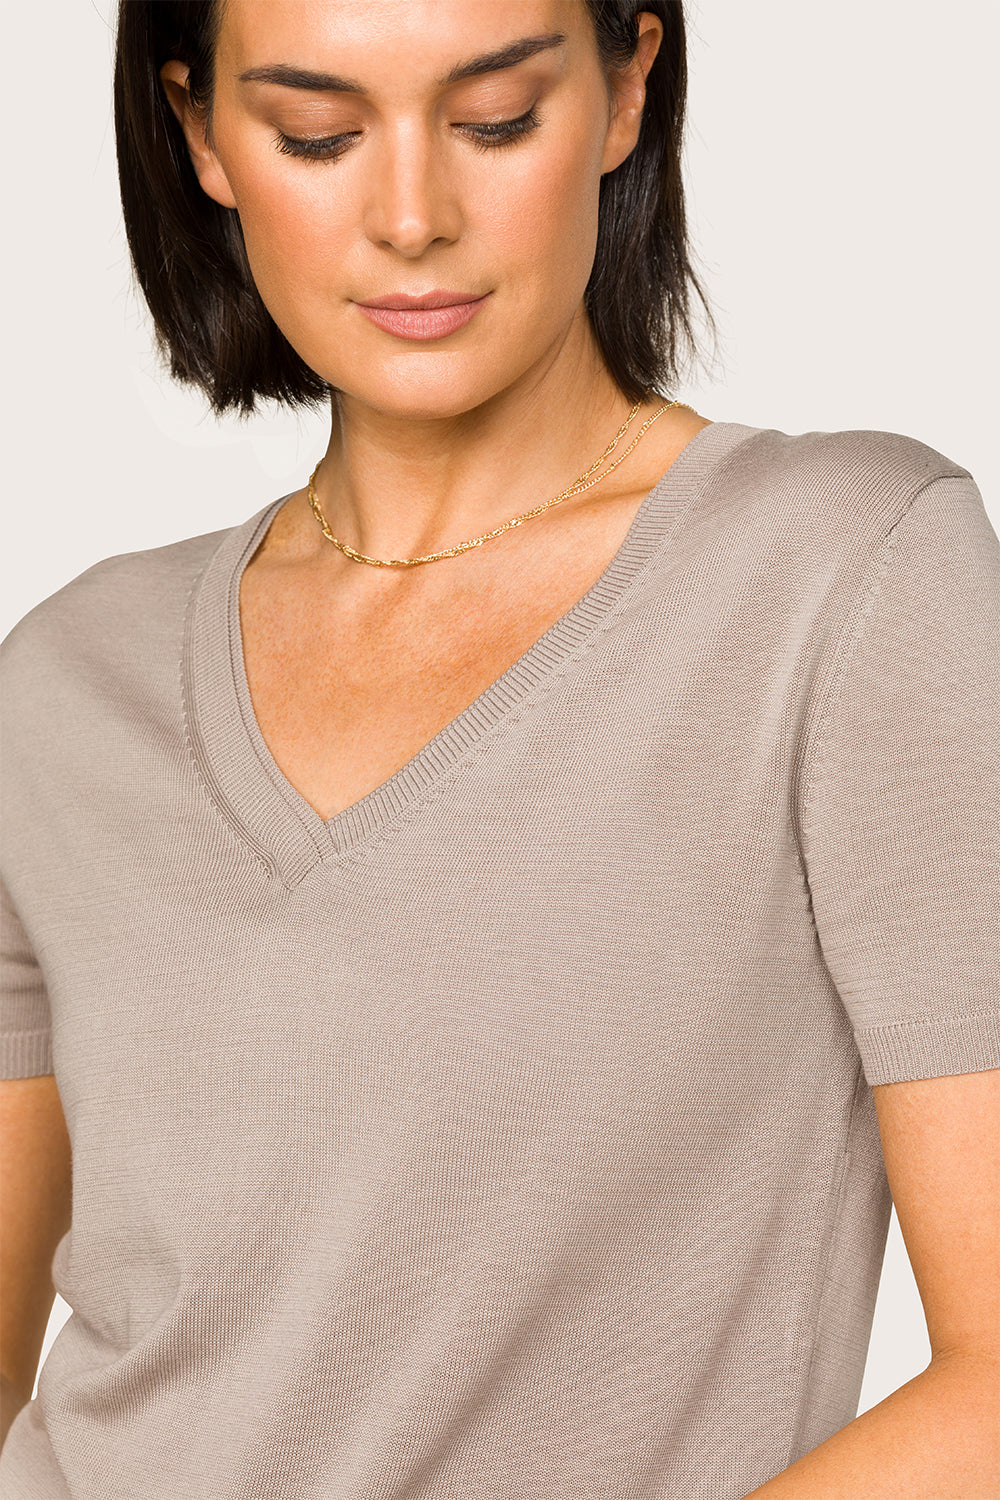 Alala women's knit v-neck t-shirt in grey